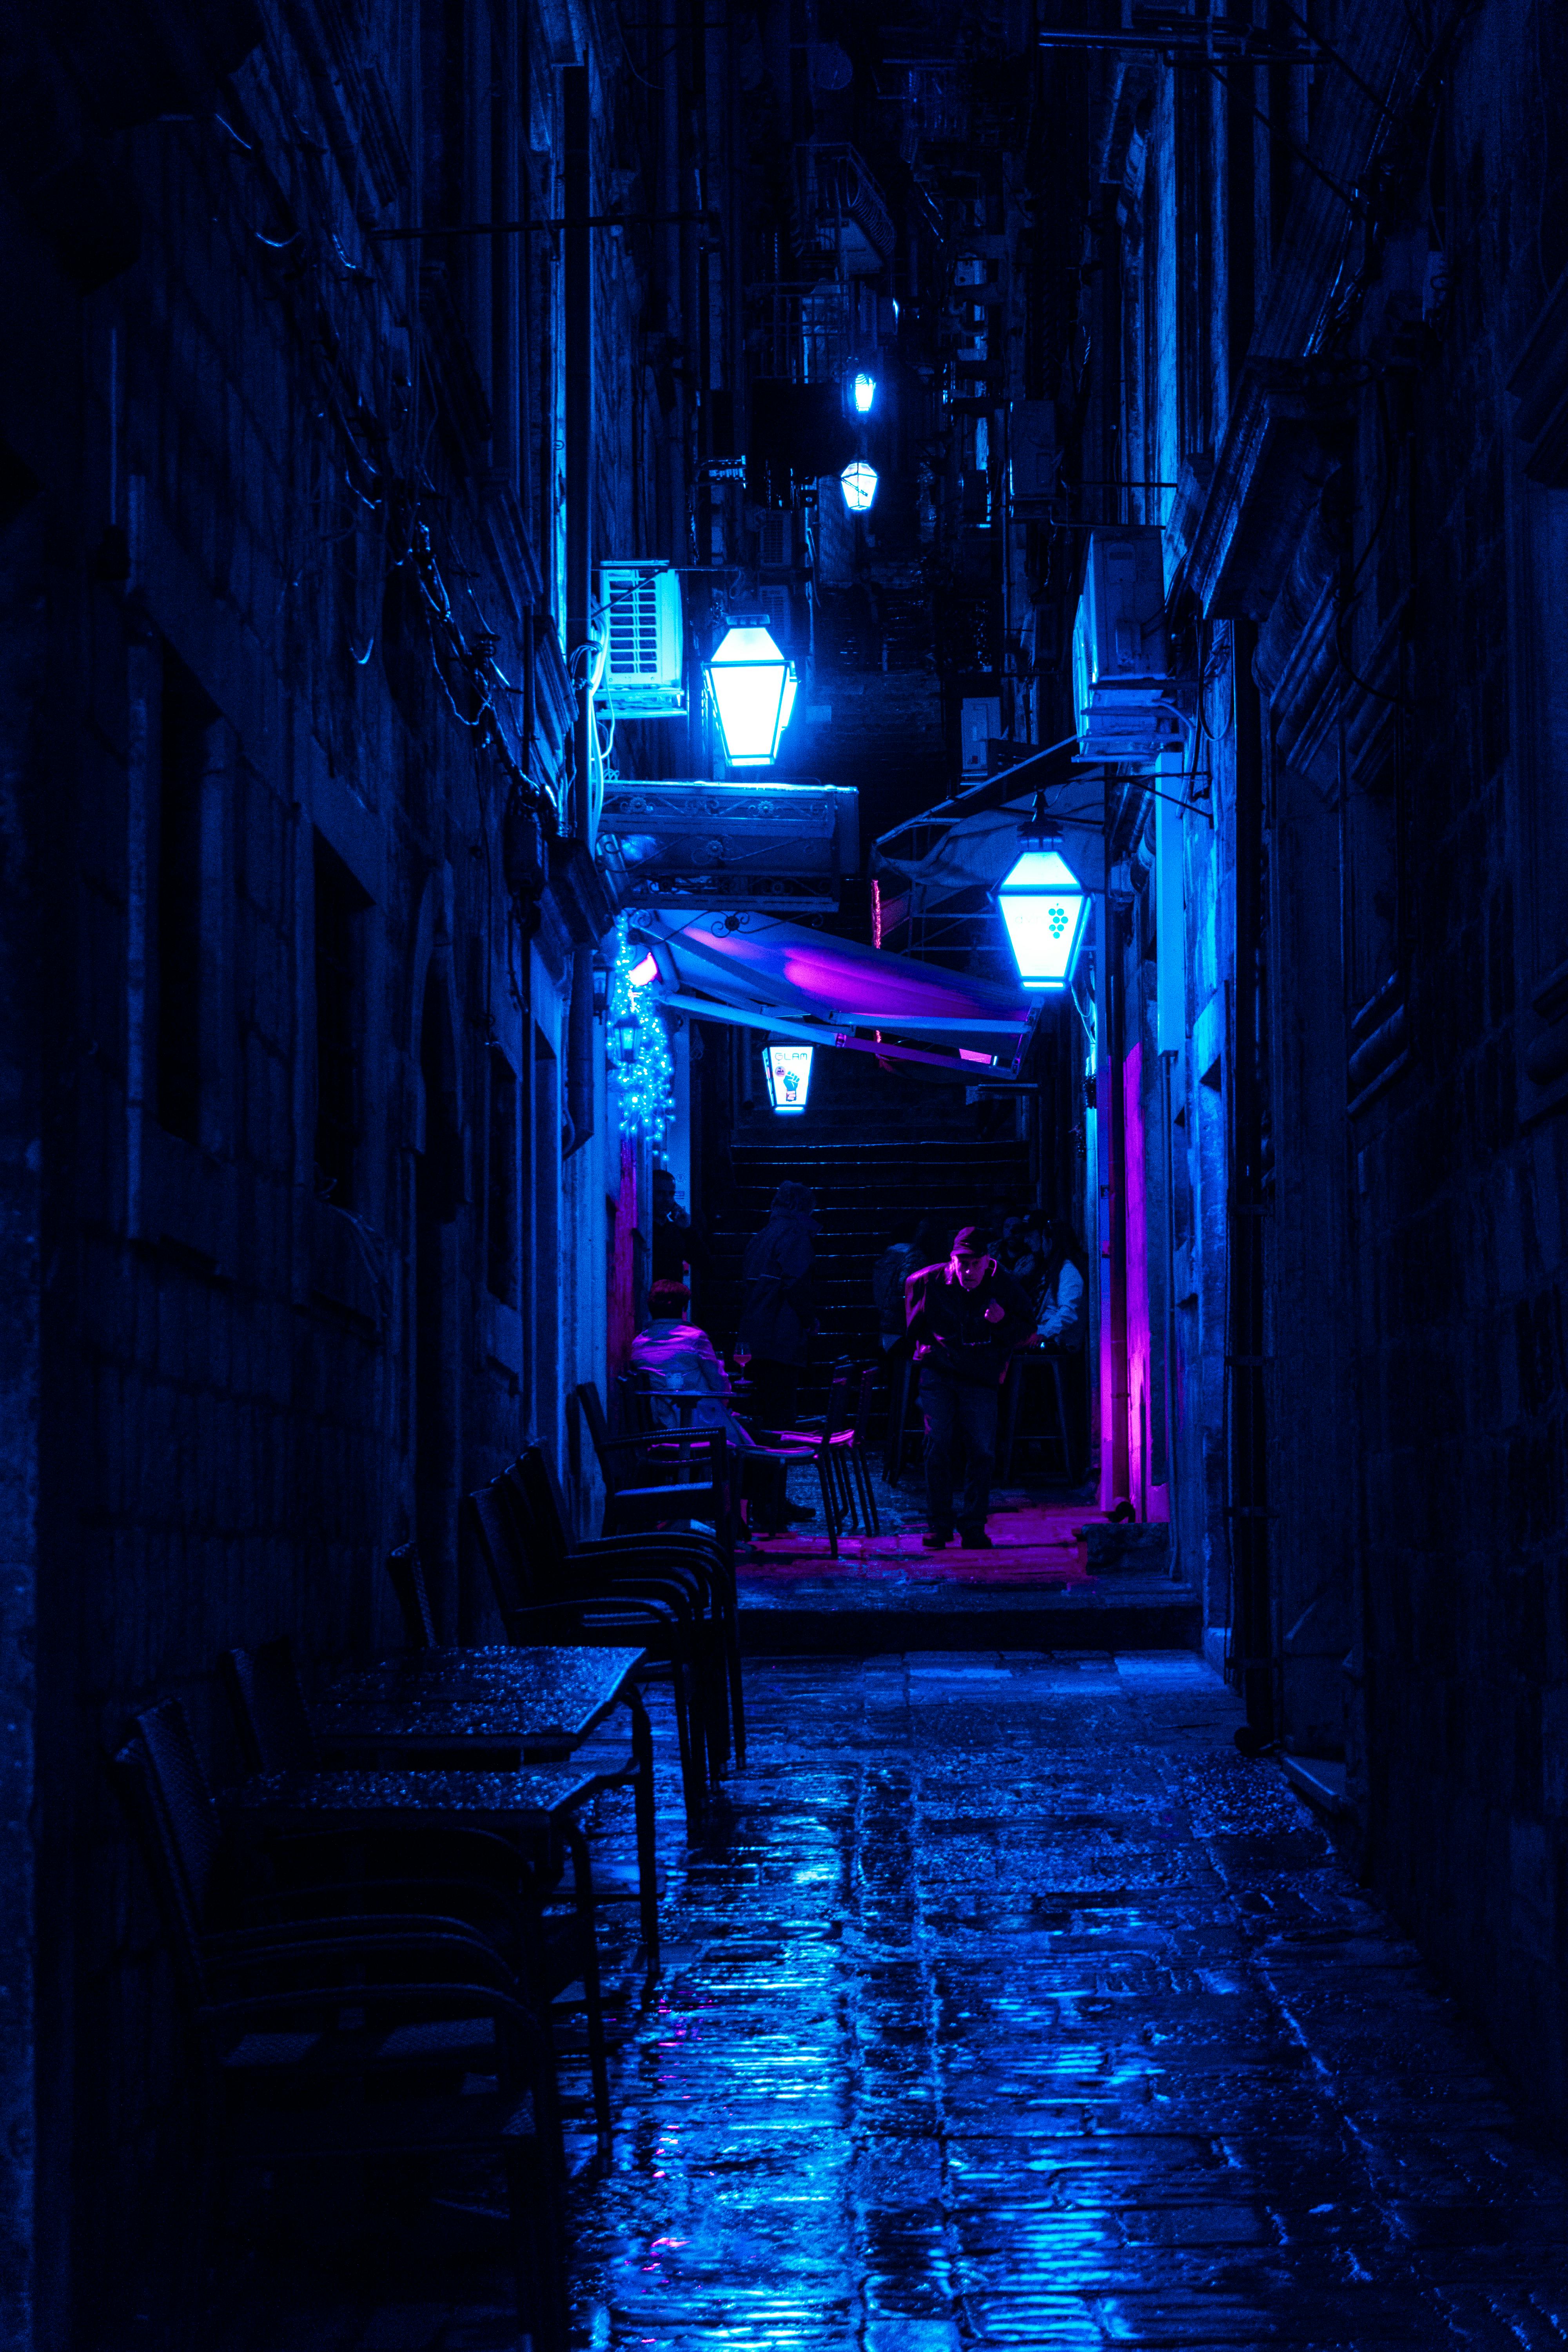 night time street